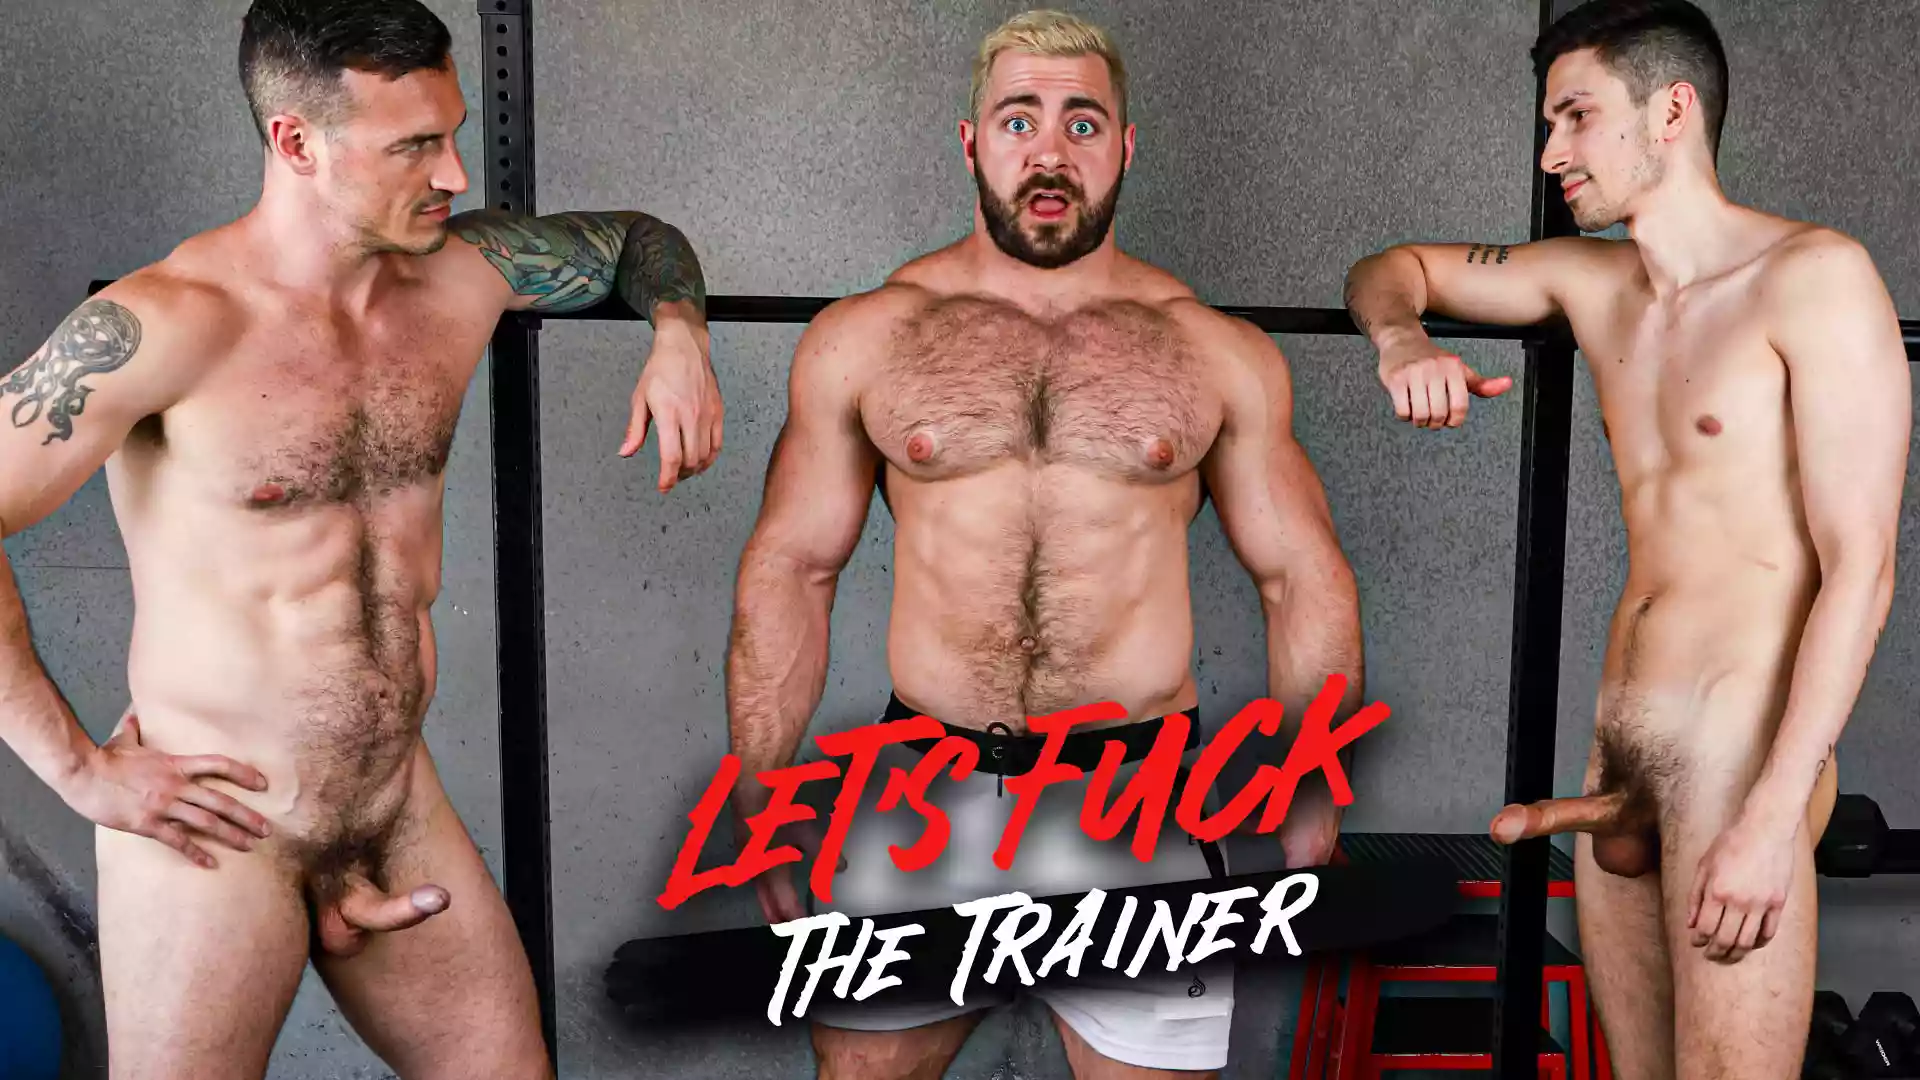 Let’s Fuck The Trainer – Derek Bolt, Kane Fox and Derek Kage